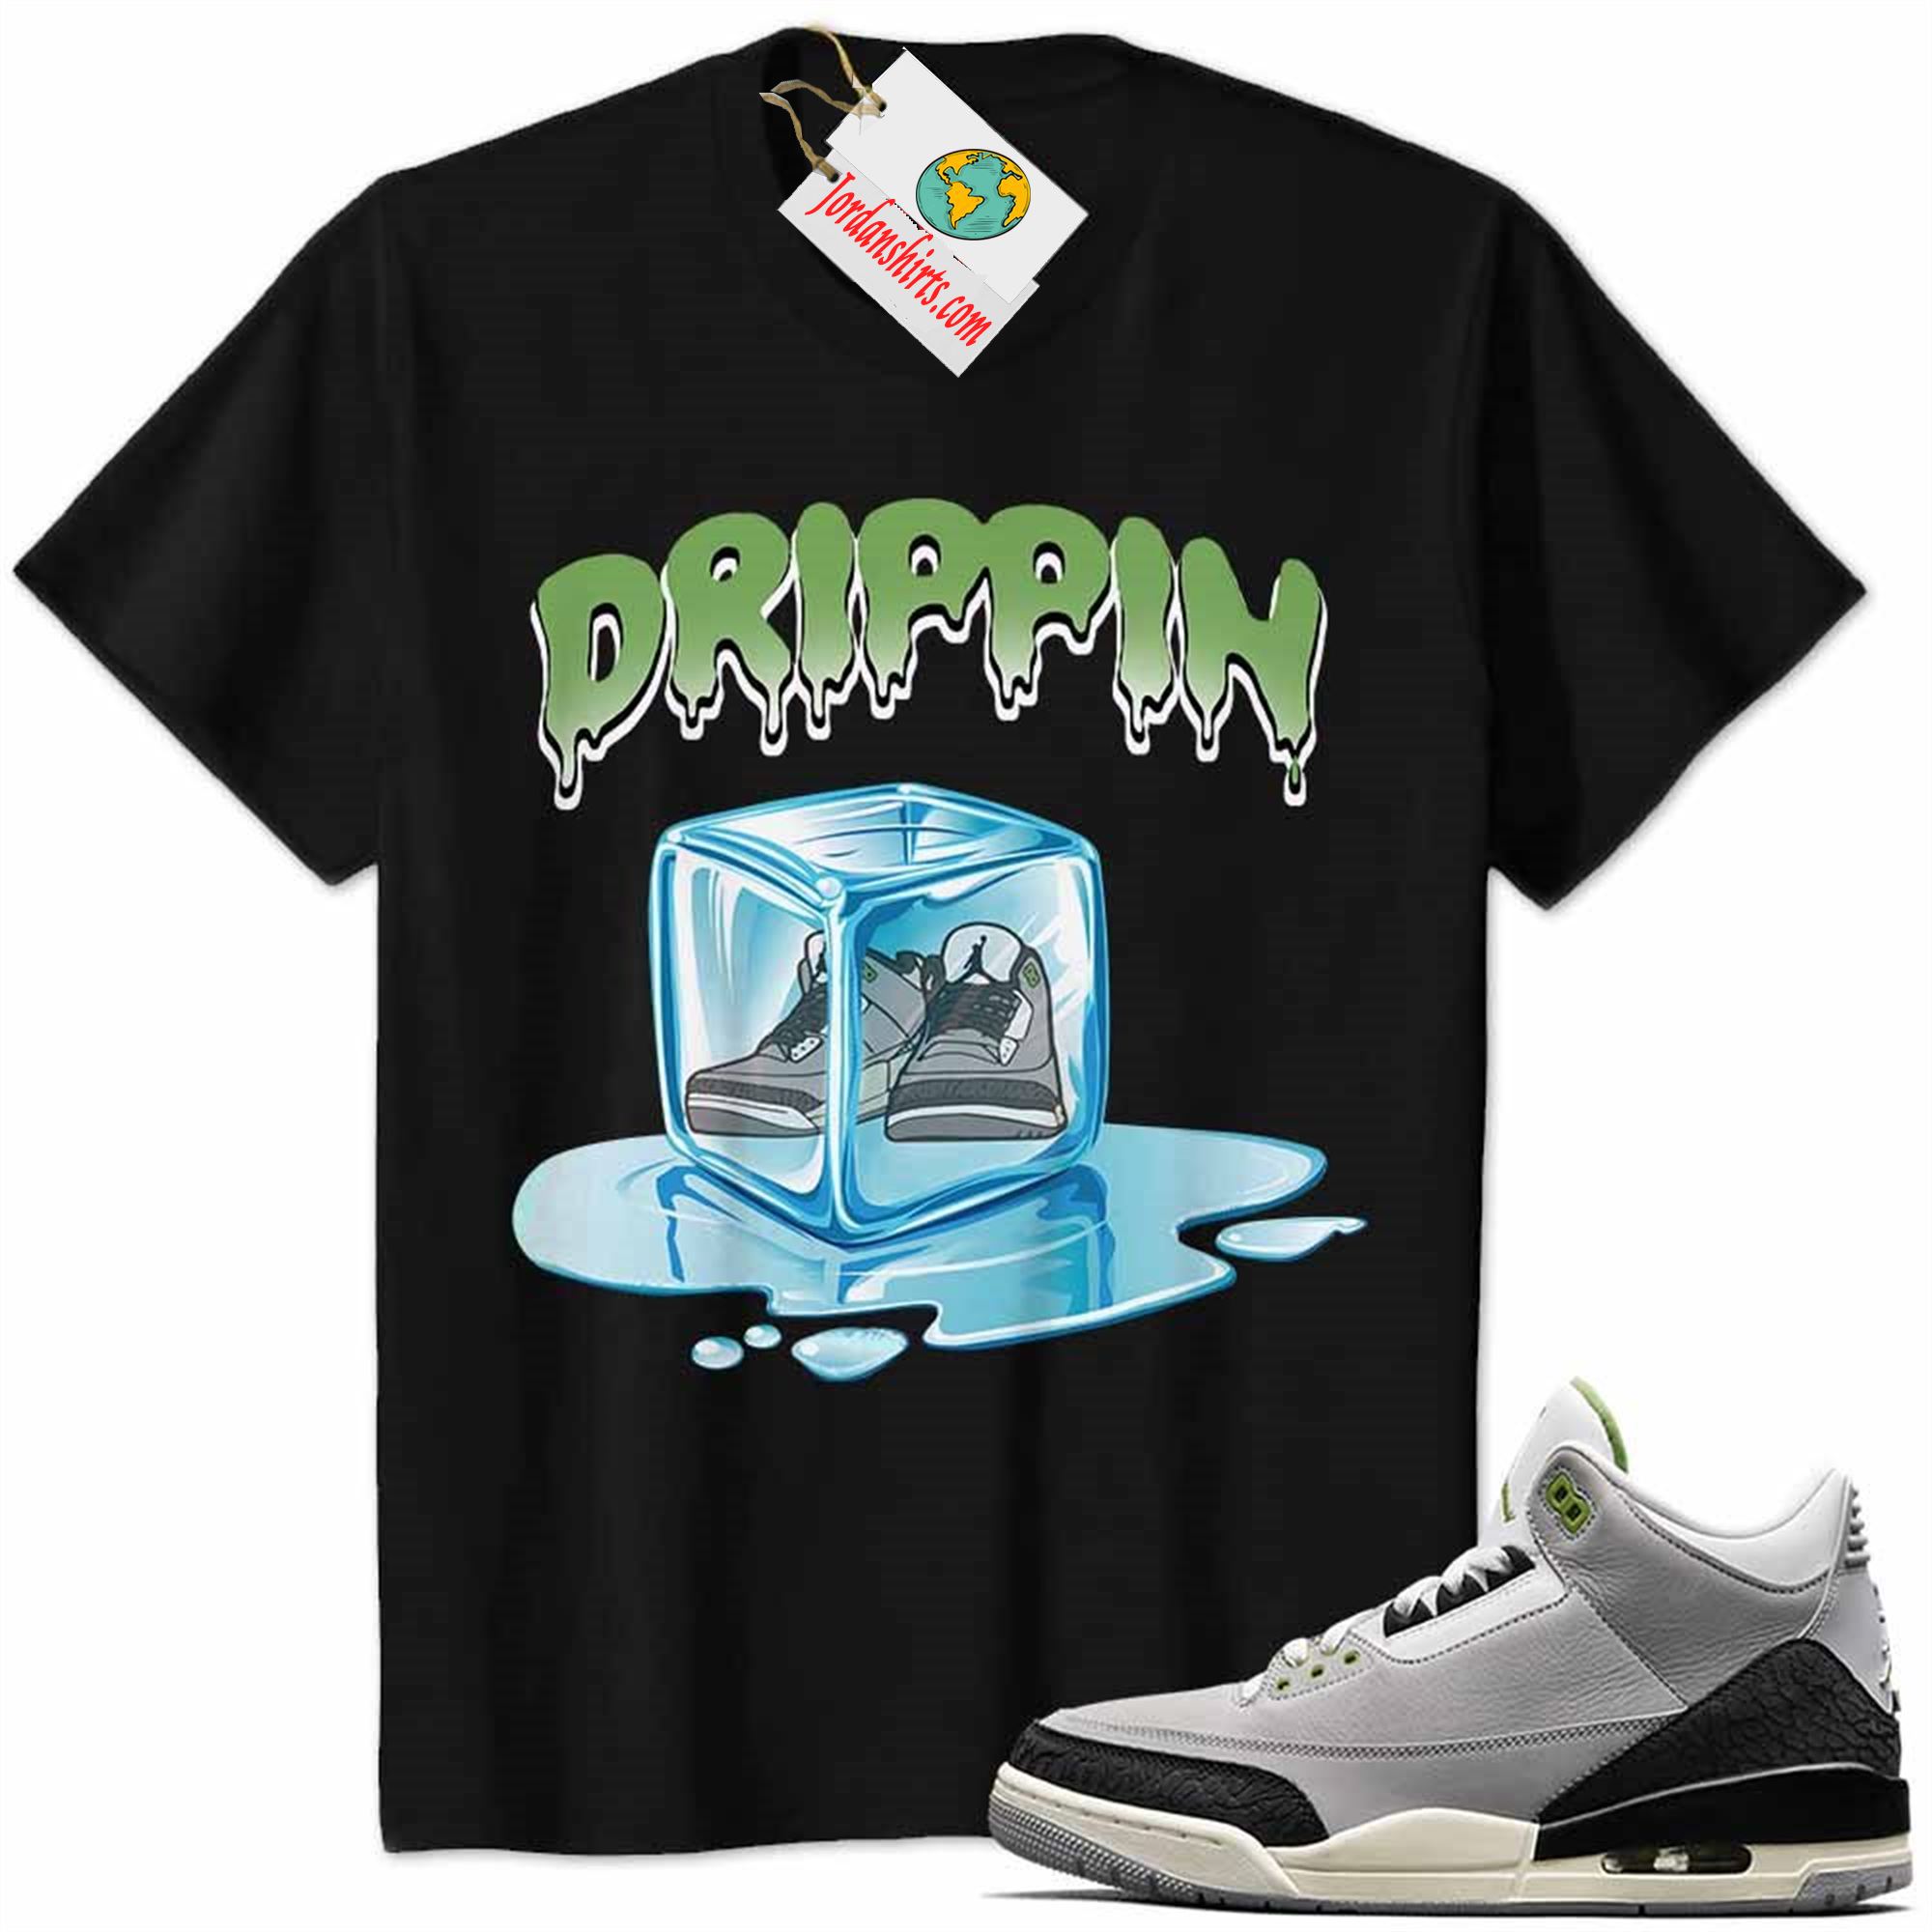 Jordan 3 Shirt, Jordan 3 Chlorophyll Shirt Ice Cube Melting Black Full Size Up To 5xl